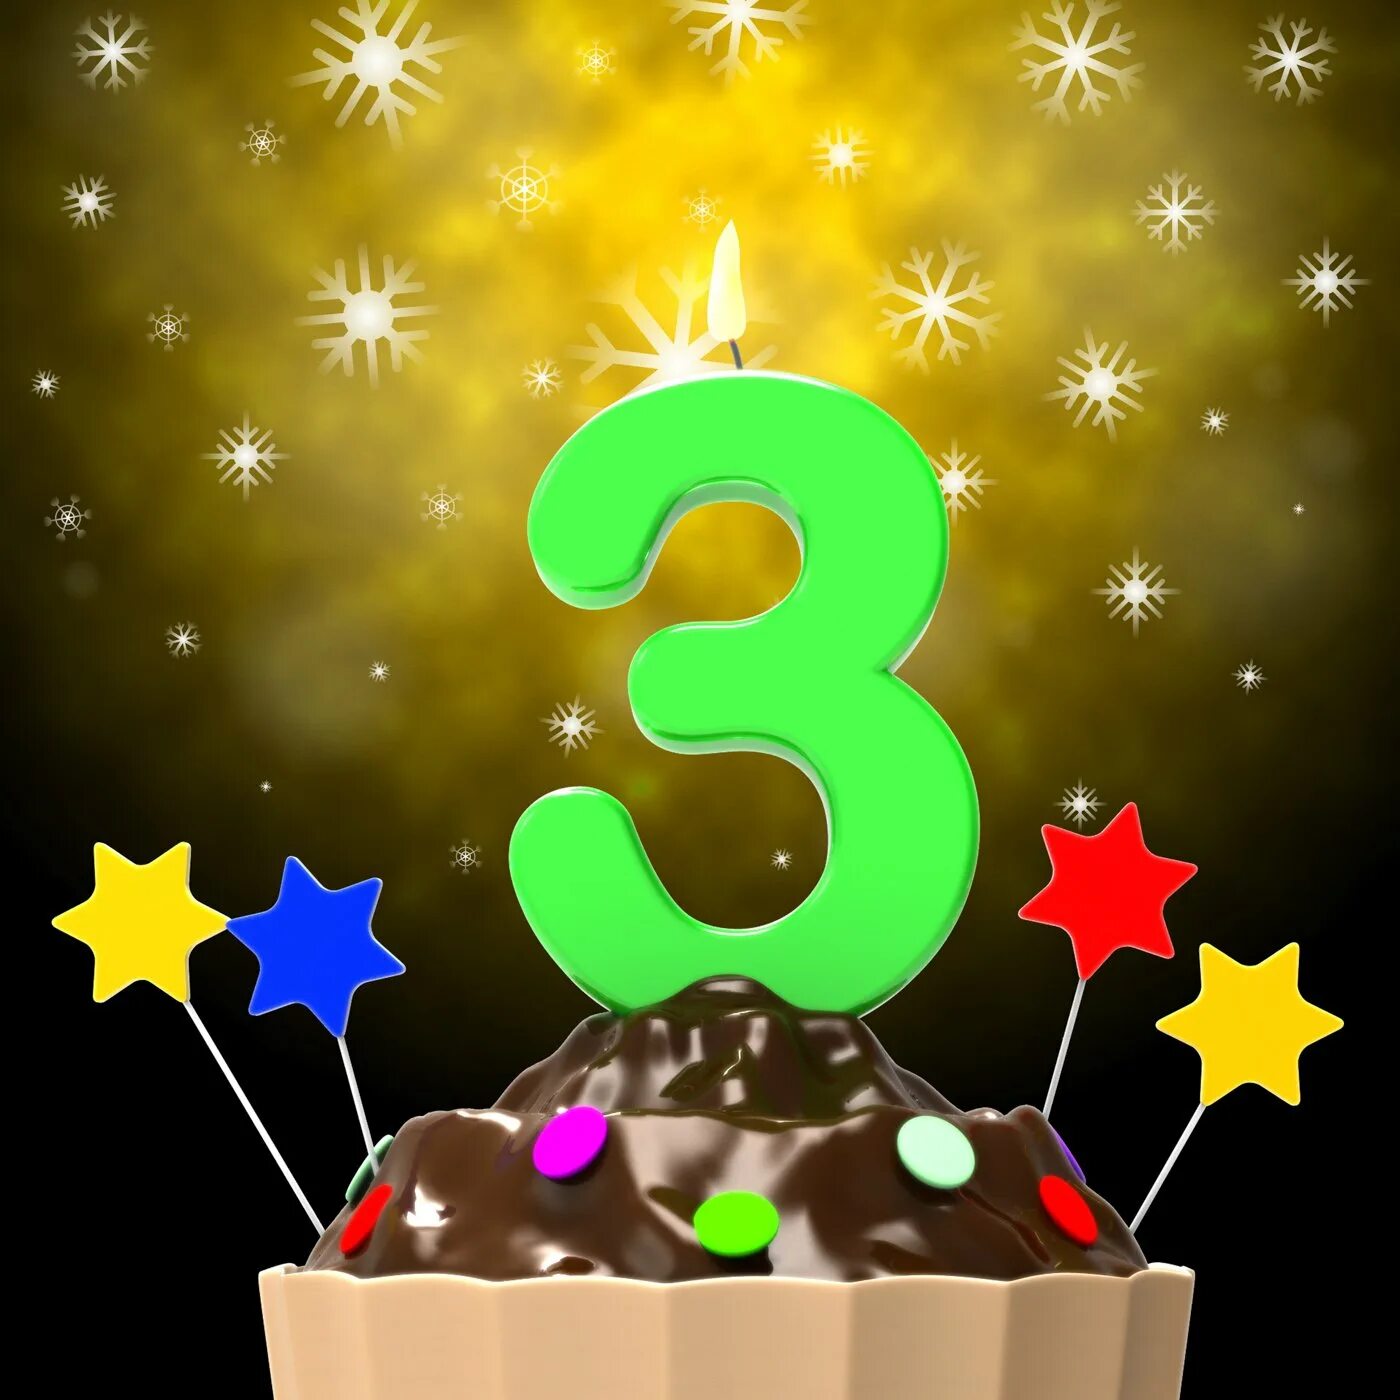 Поздравления сына 3. Свечка 3 года на торт. Торт с 3 свечками. Три годика торт со свечками. Три года торт со свечами.